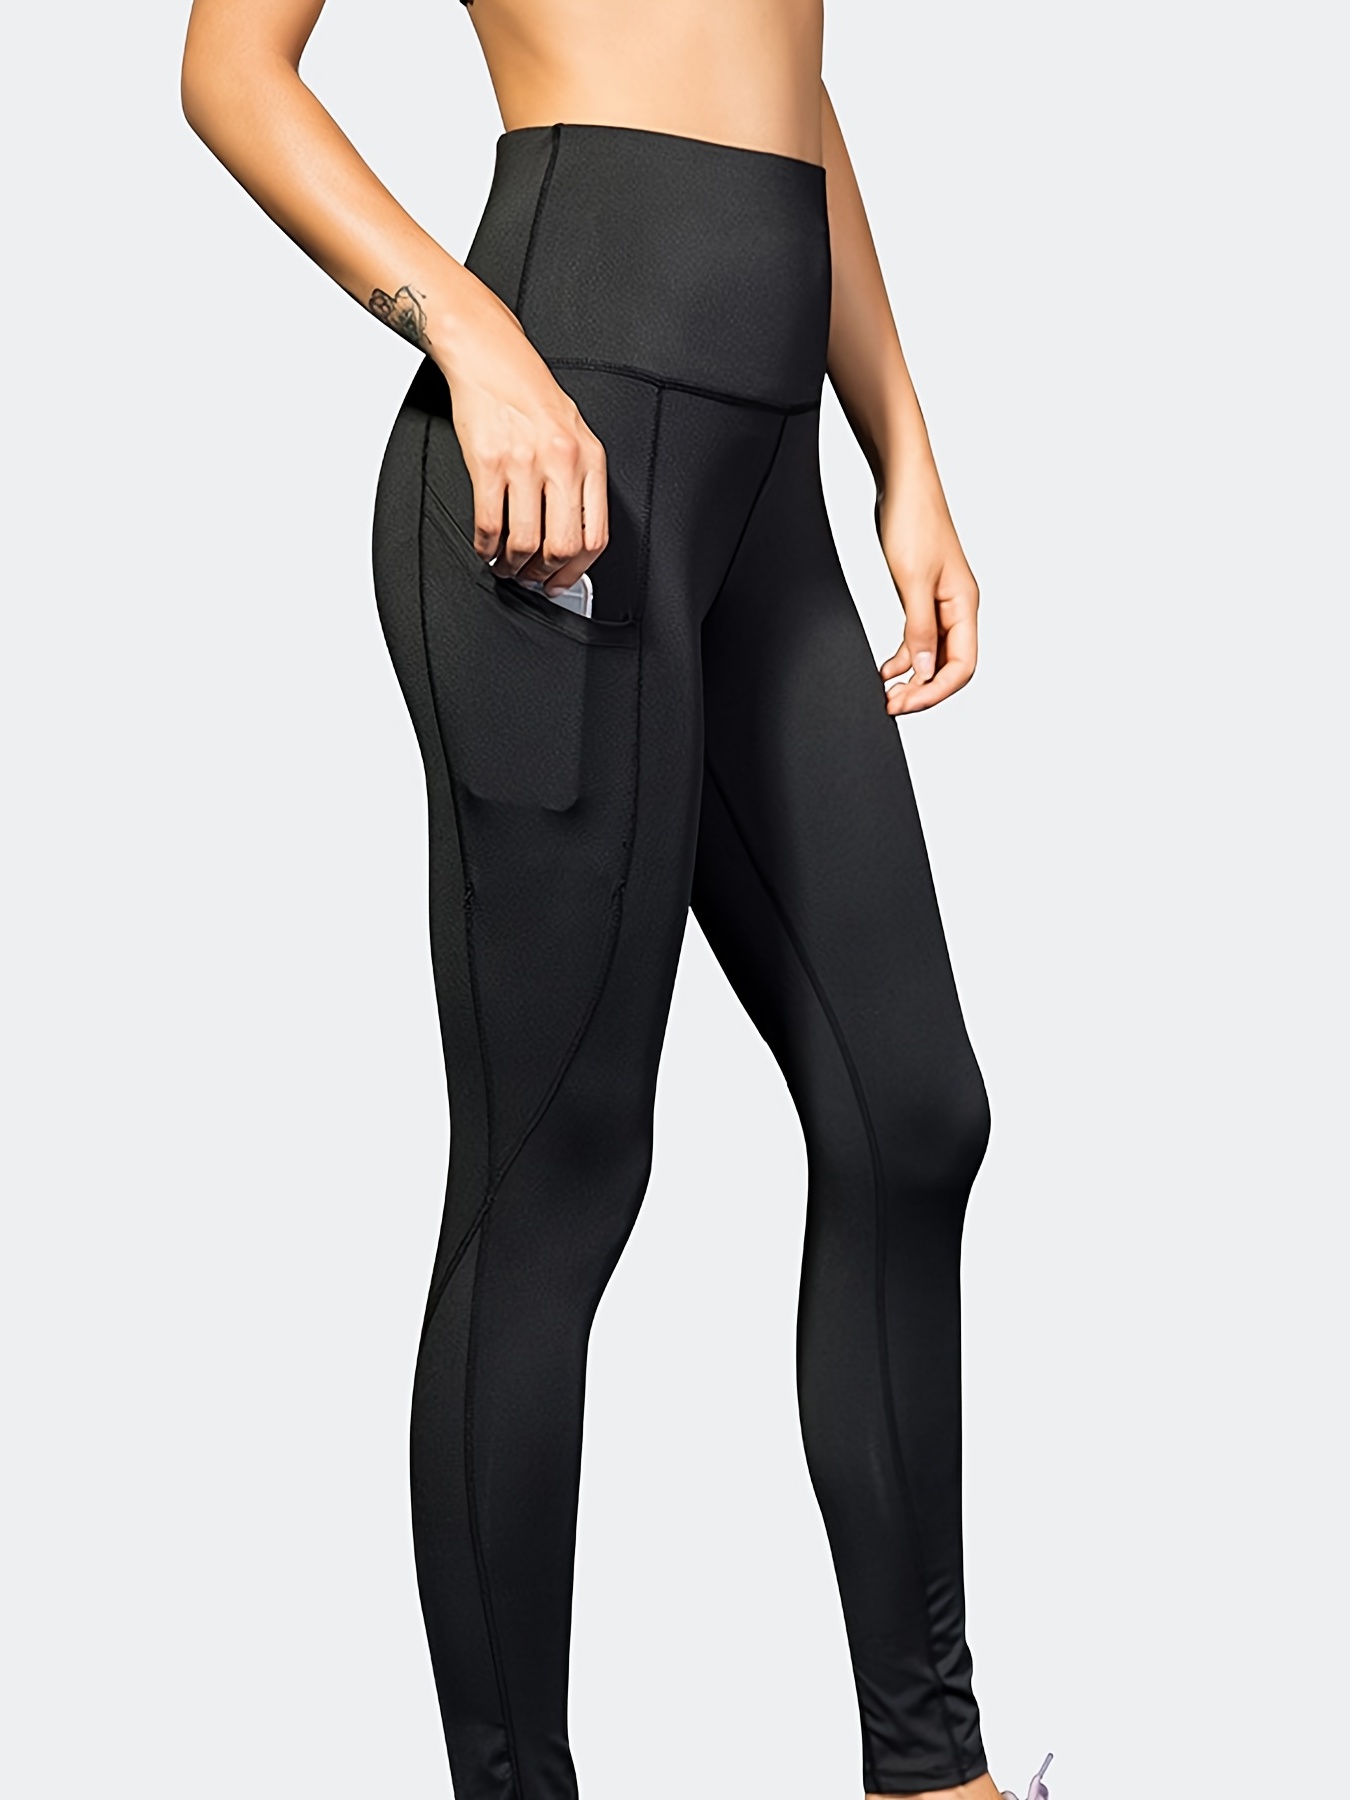 Buy Women's High Waist Yoga Pants Pockets Tummy Workout Running